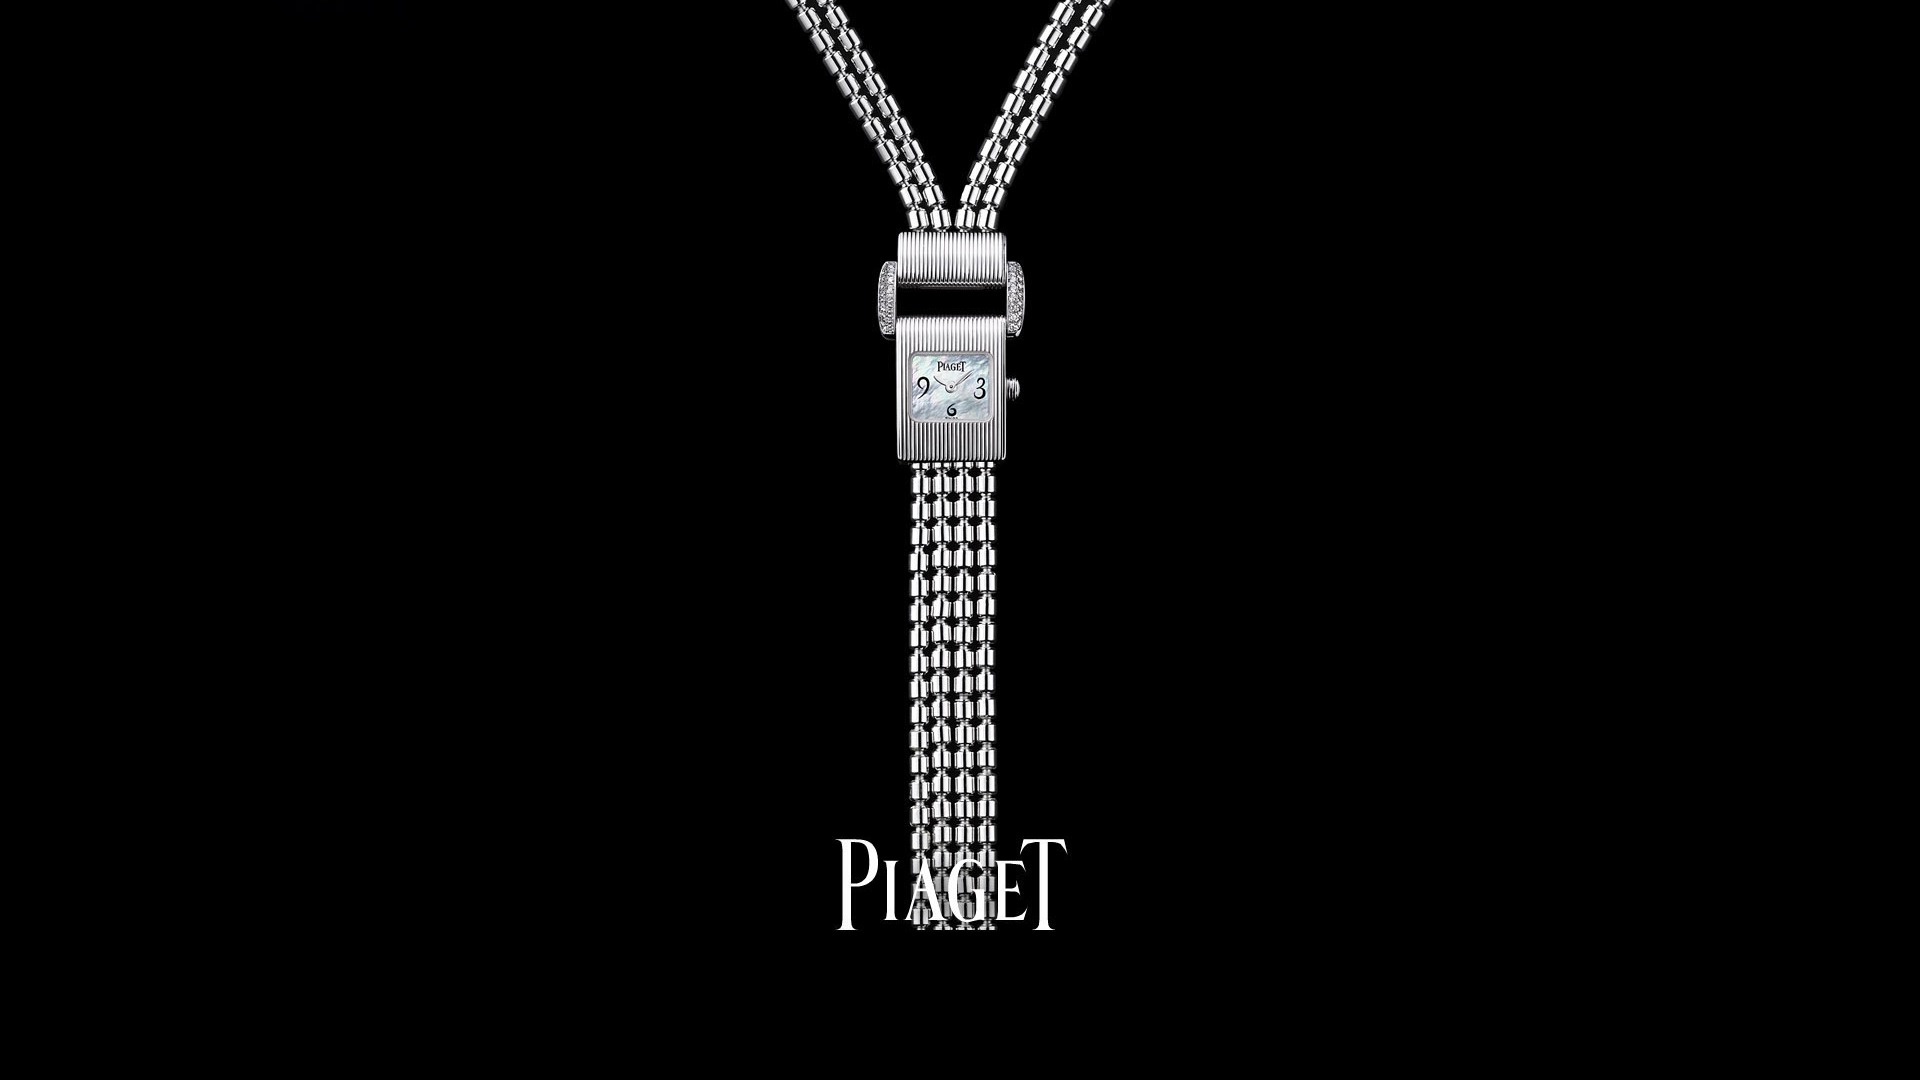 Piaget Diamond watch wallpaper (1) #3 - 1920x1080